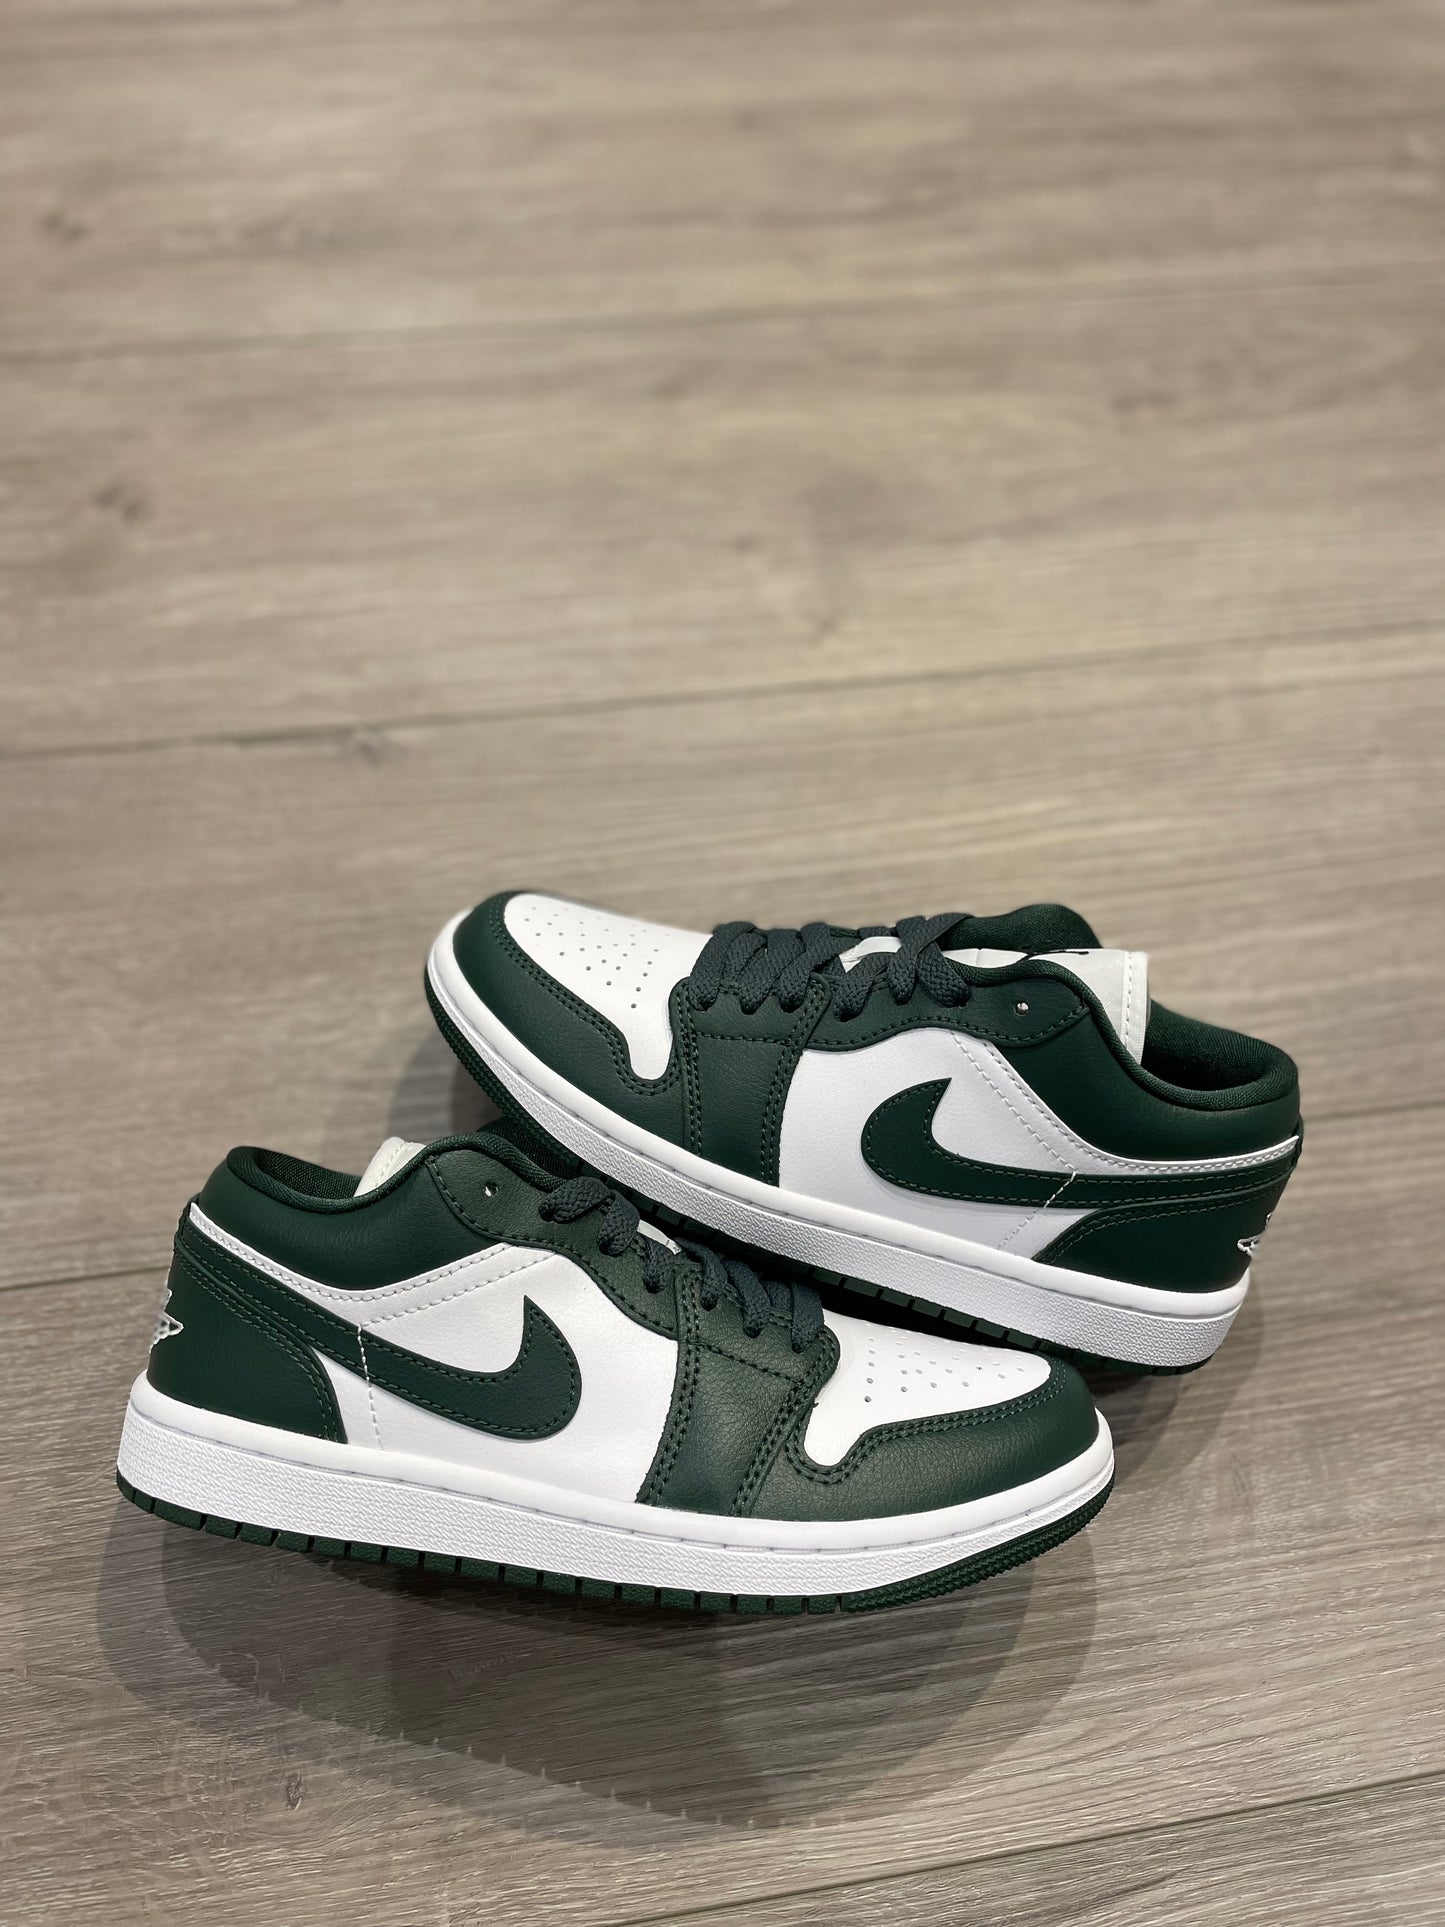 Air Jordan 1 Low “Emerald Green”